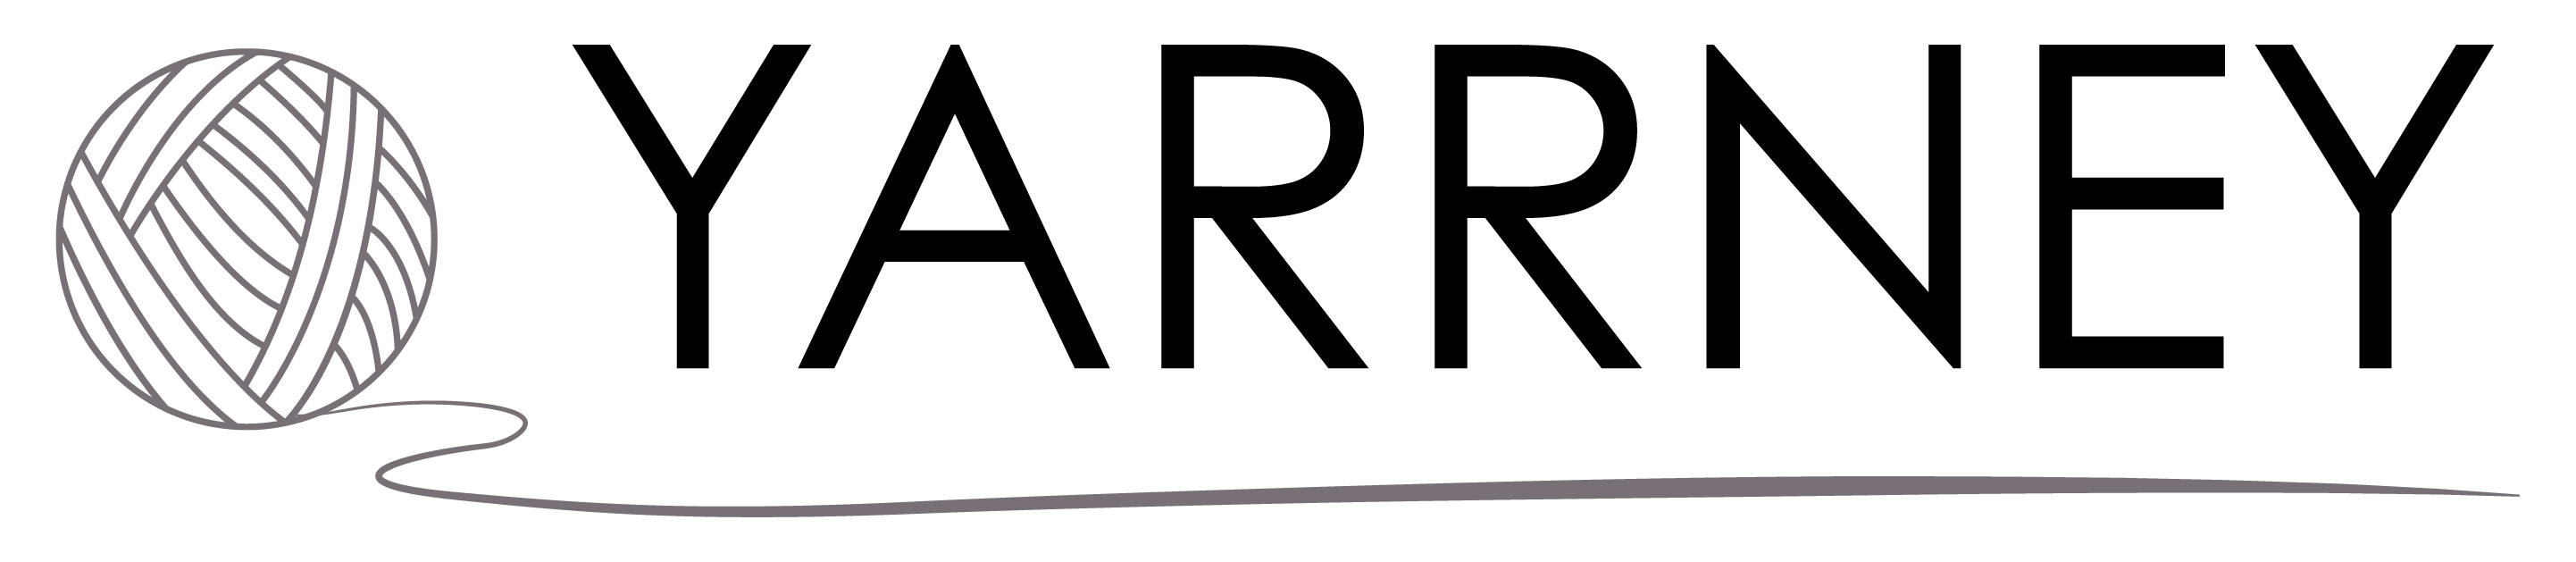 yarrney logo